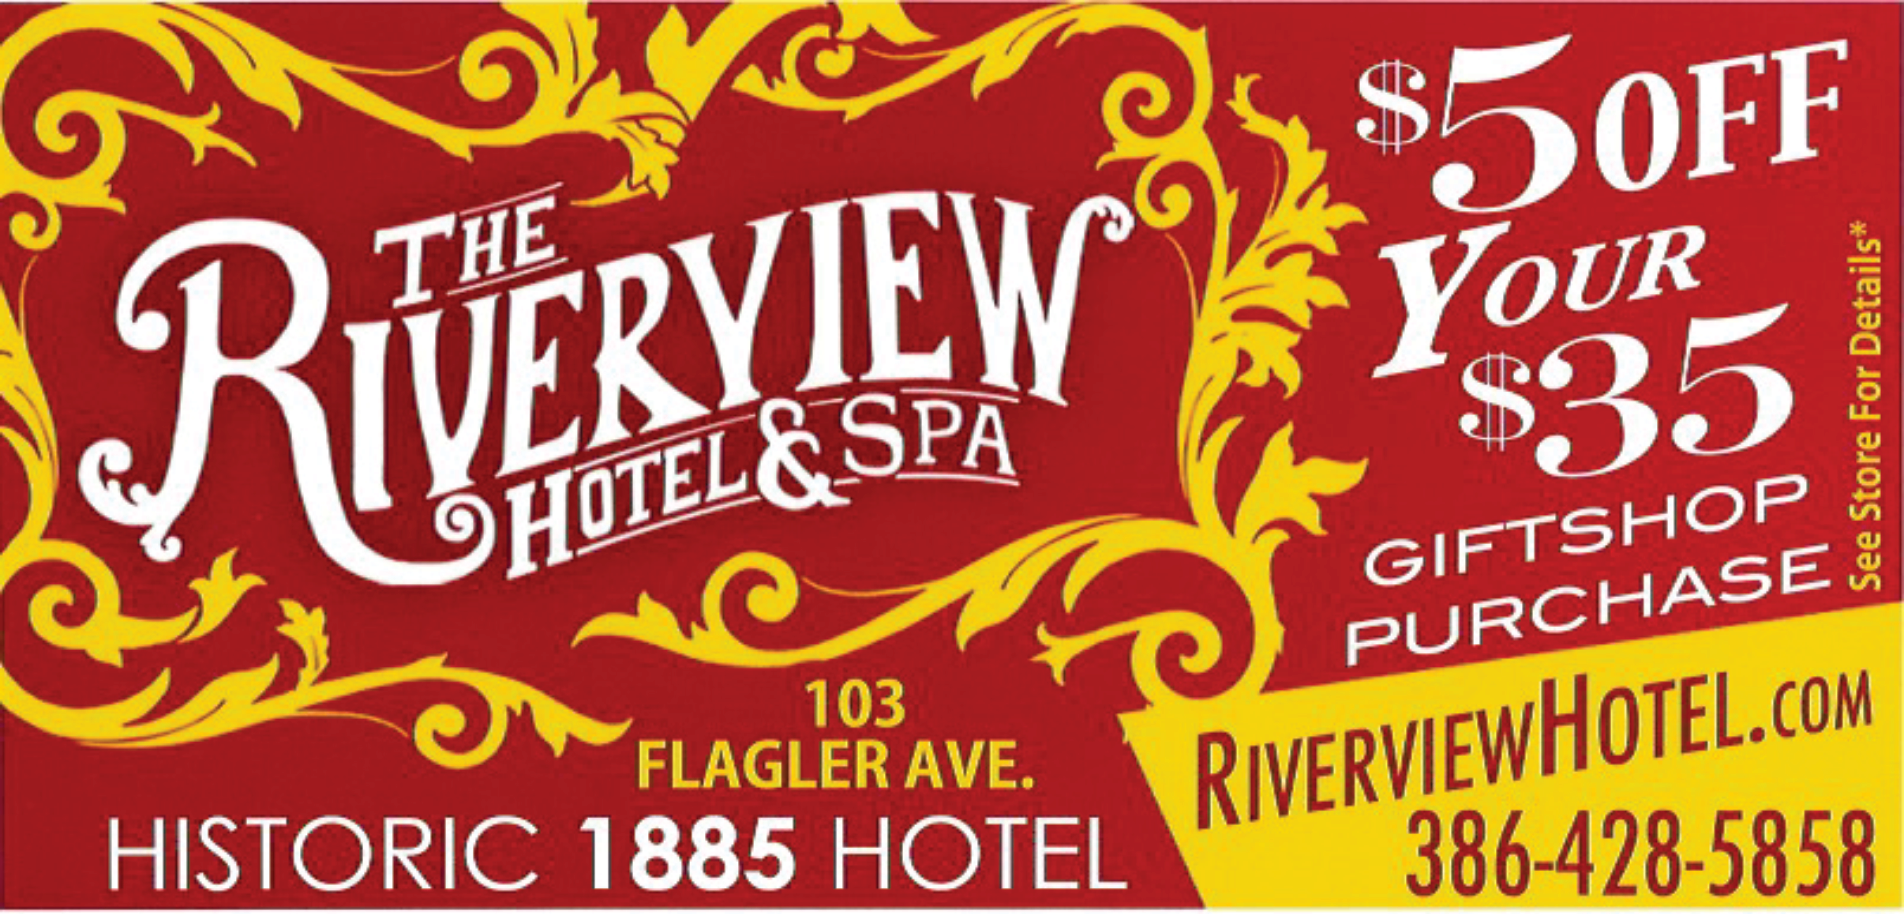 Riverview Hotel & Spa Print Ad